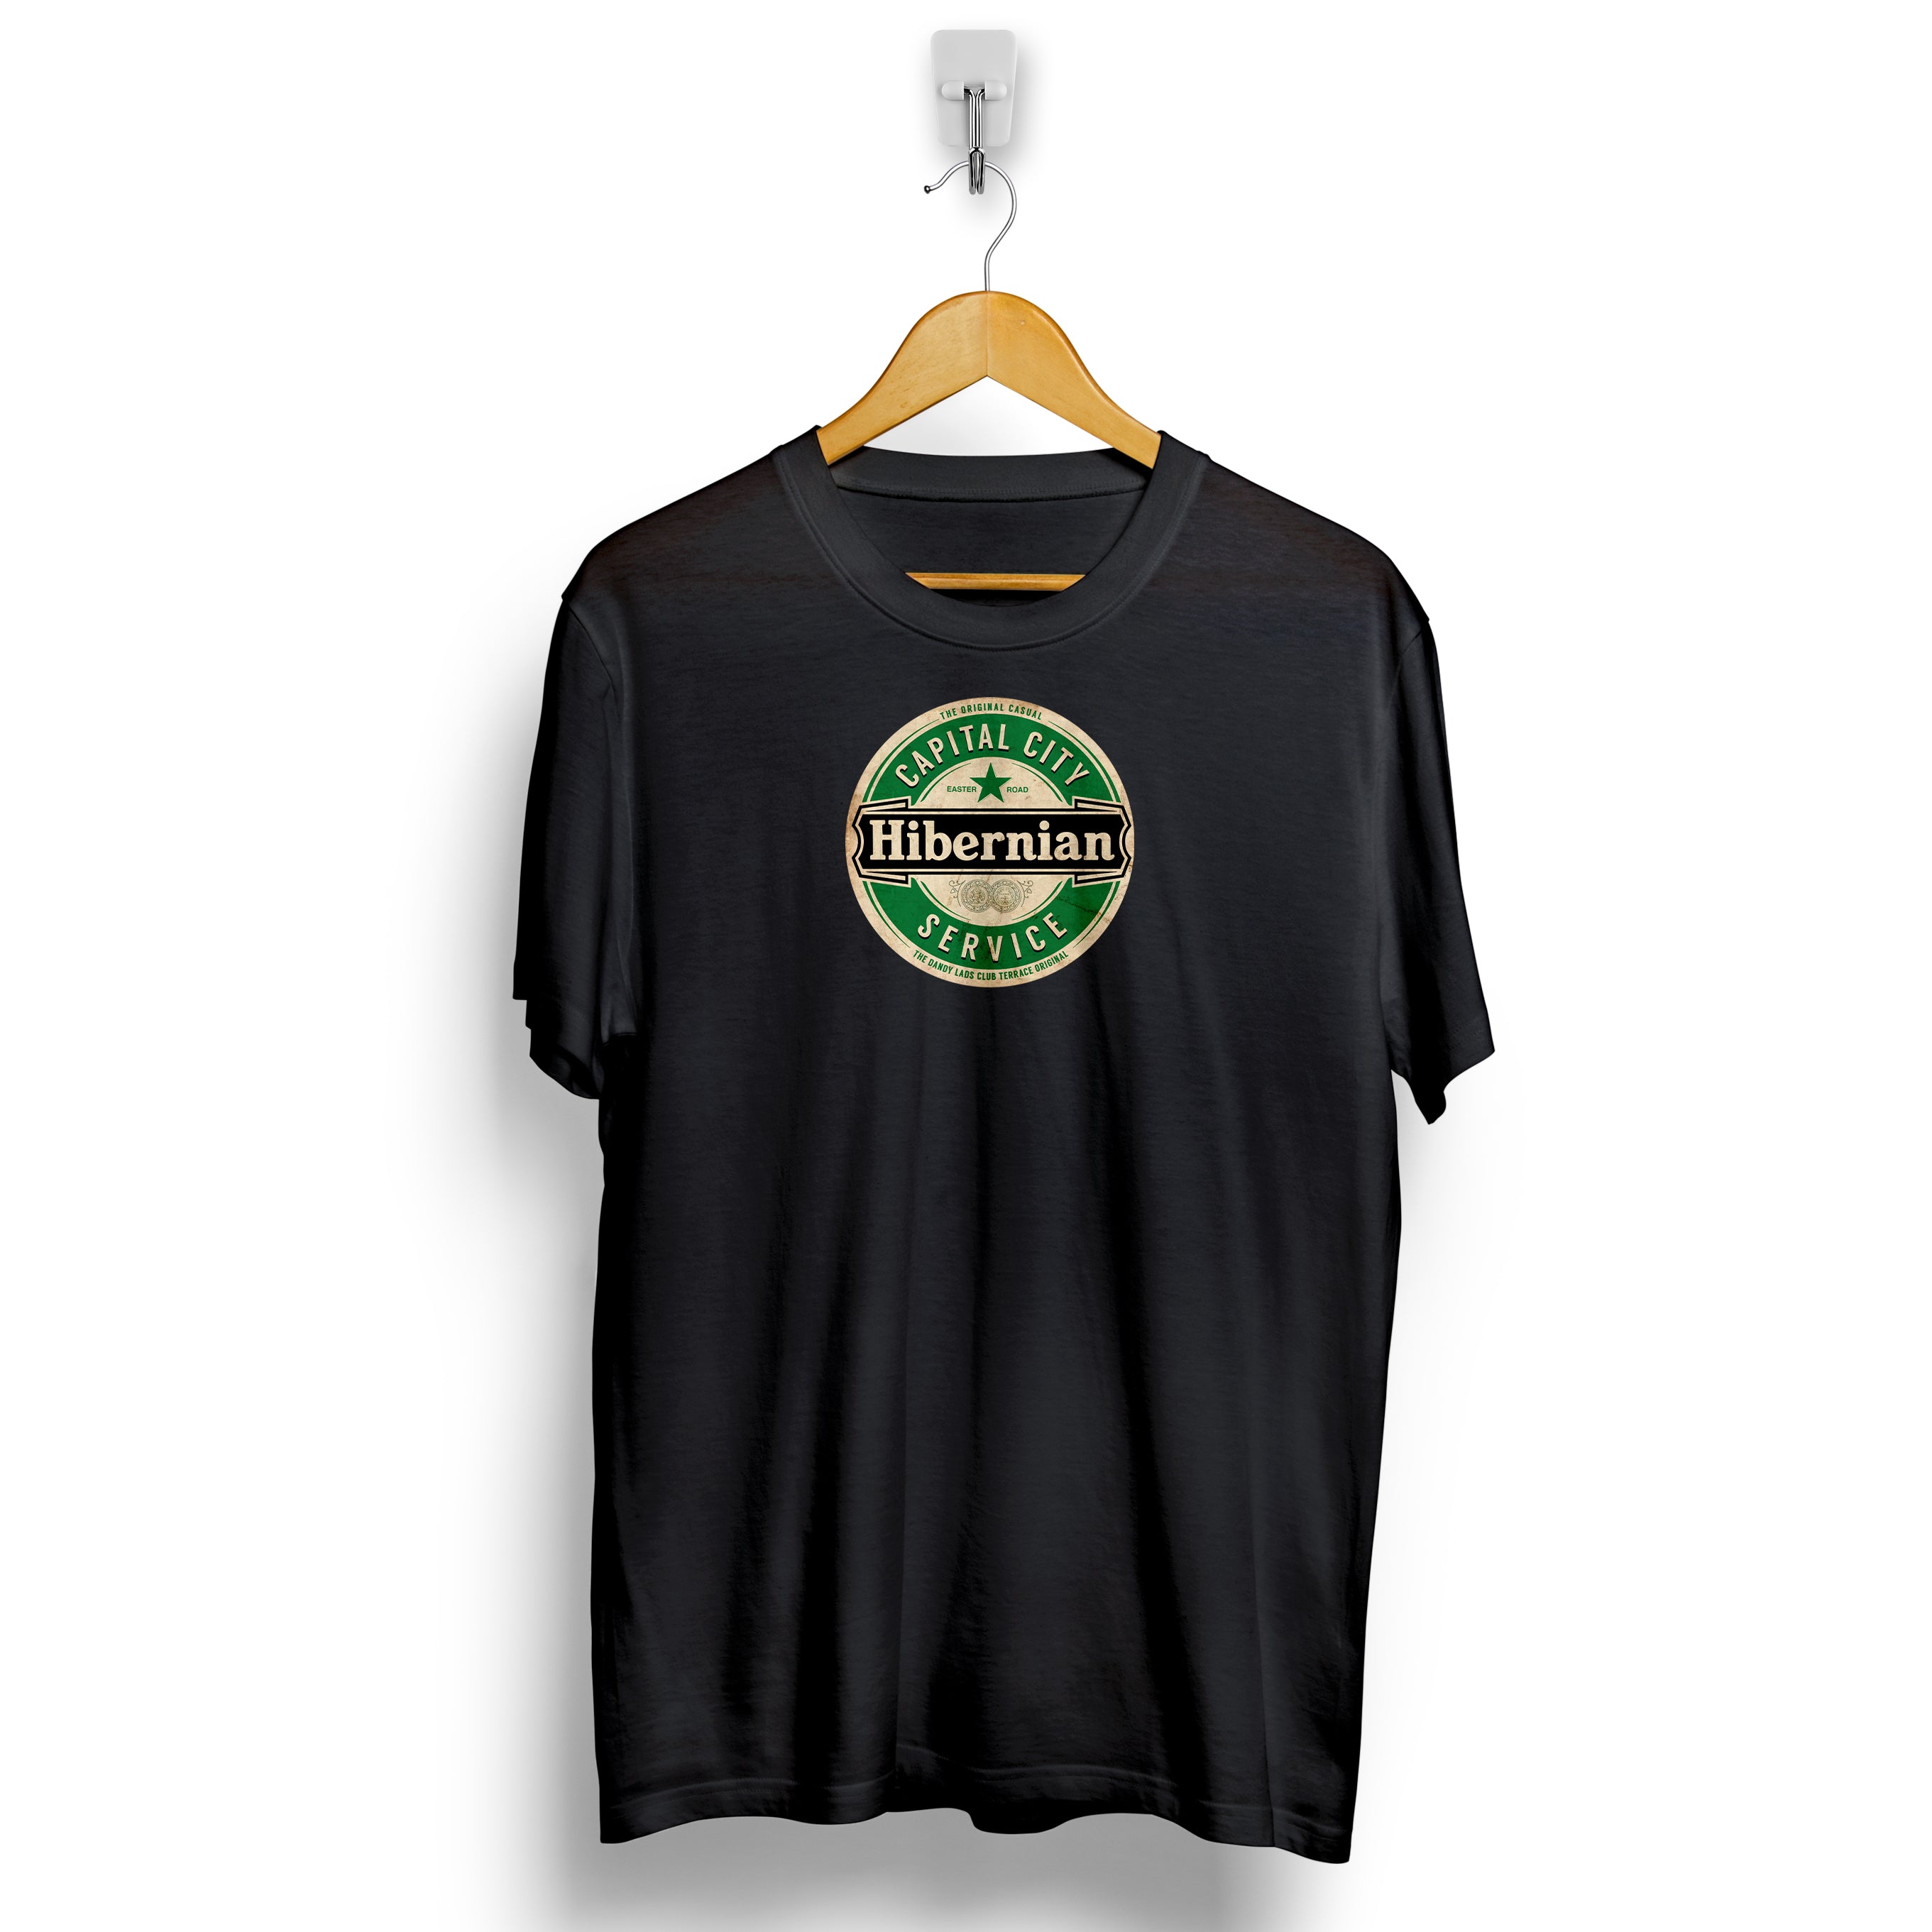 Capital City Service Hibernian Football Casuals T Shirt